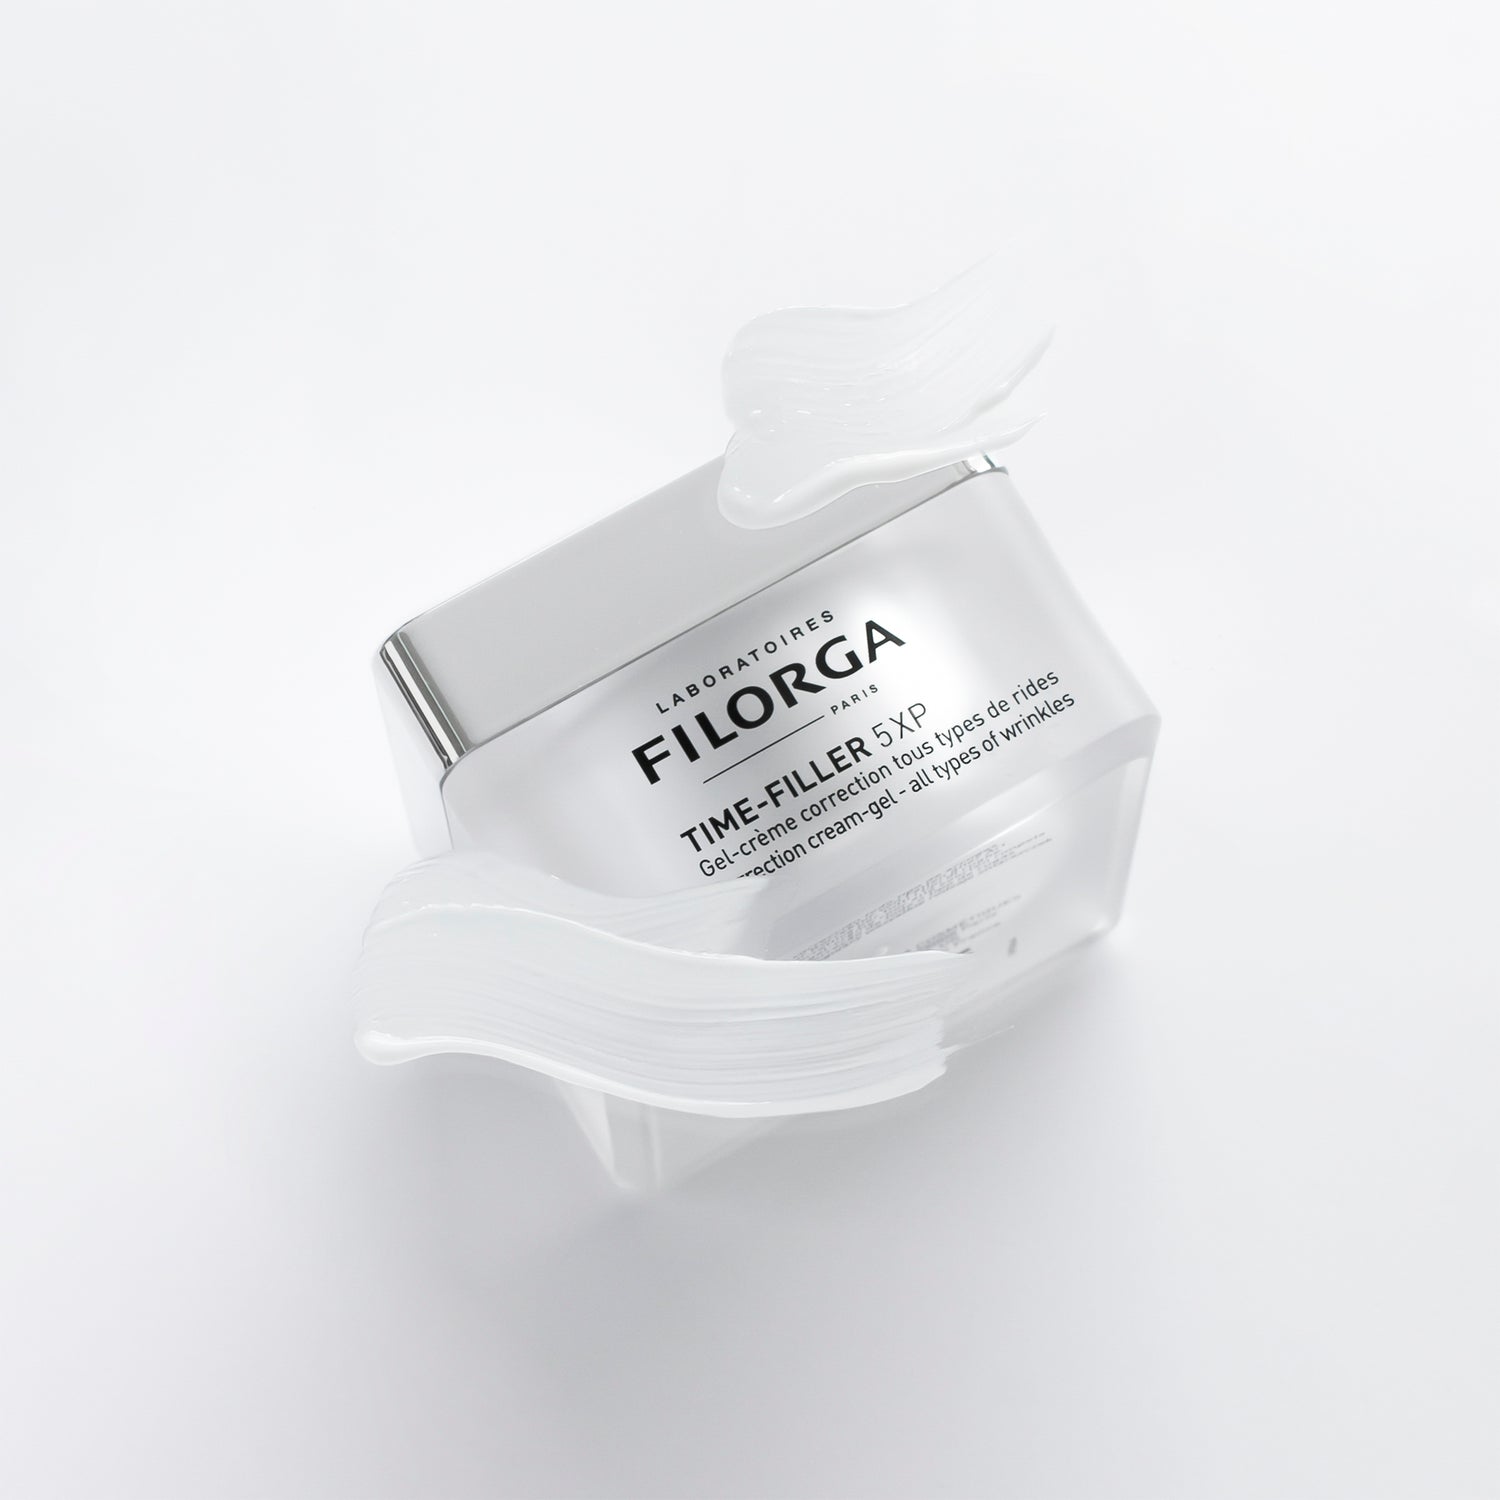 FILORGA TIME-FILLER 5-XP CREAM-GEL jar on white background facing up with cream-gel texture around it